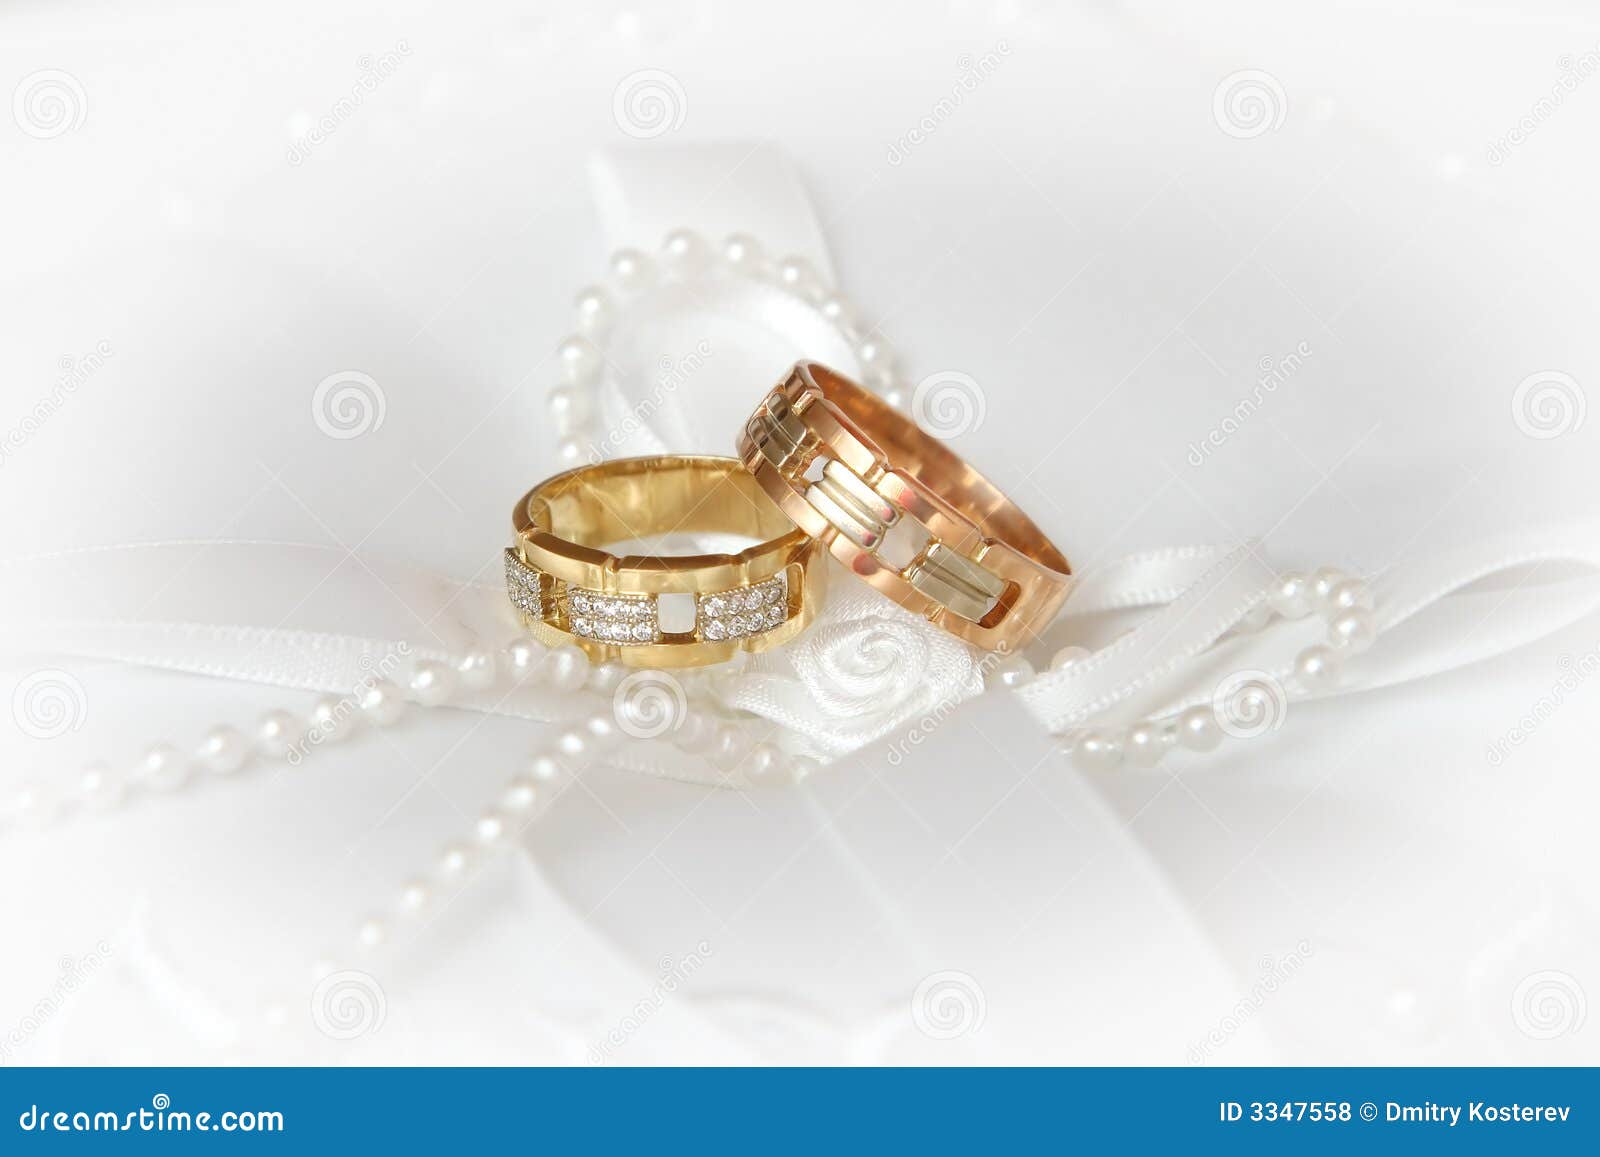 wedding rings (closeup)